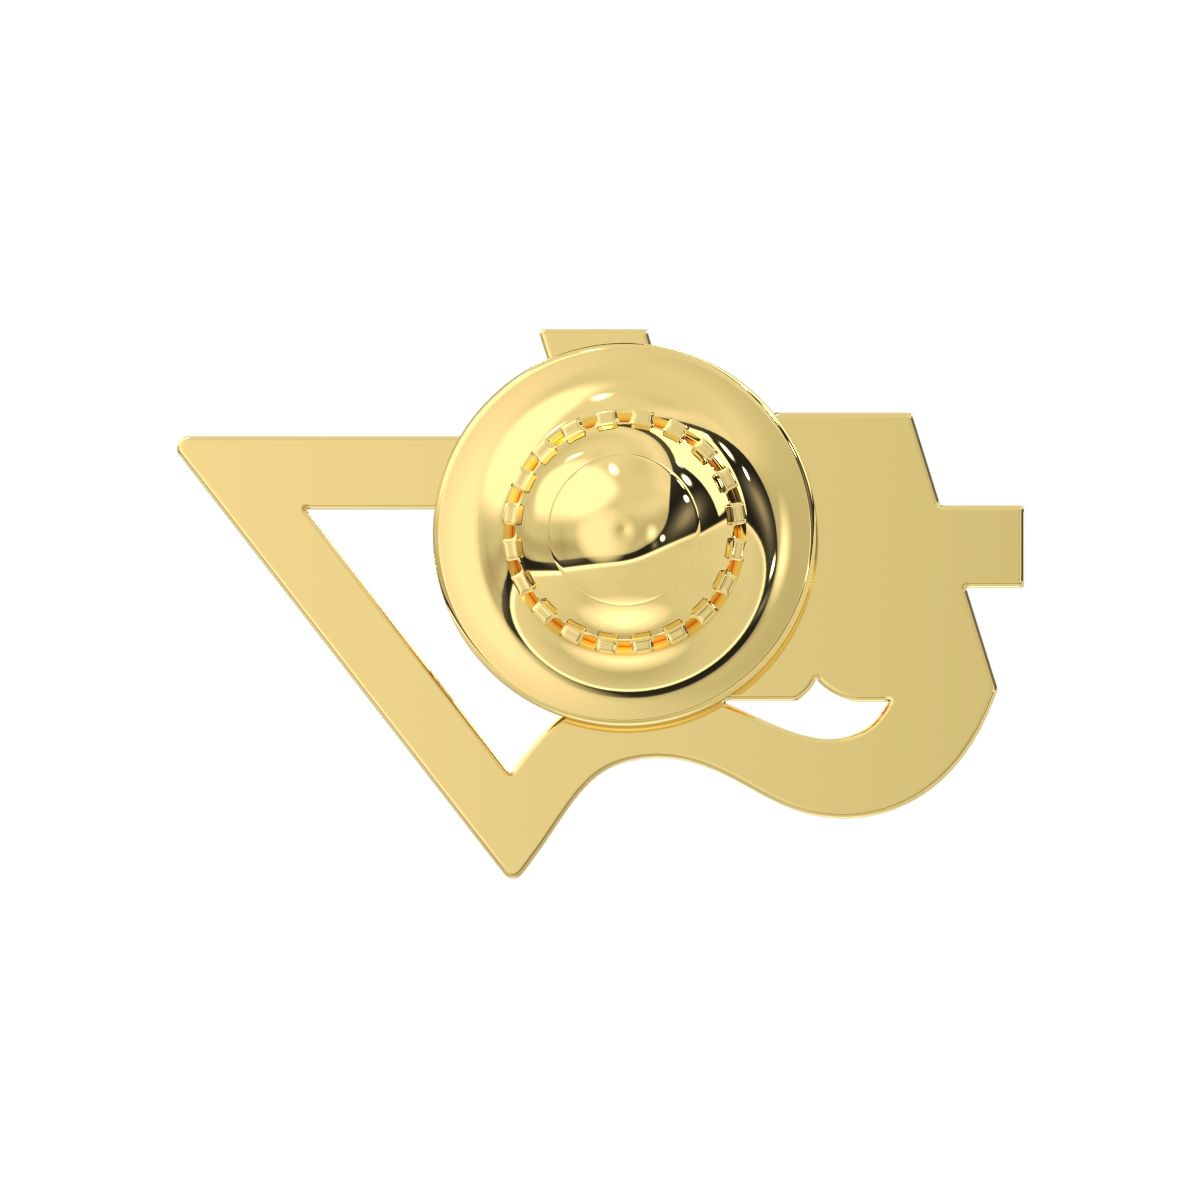  Pin logo Calista 05 